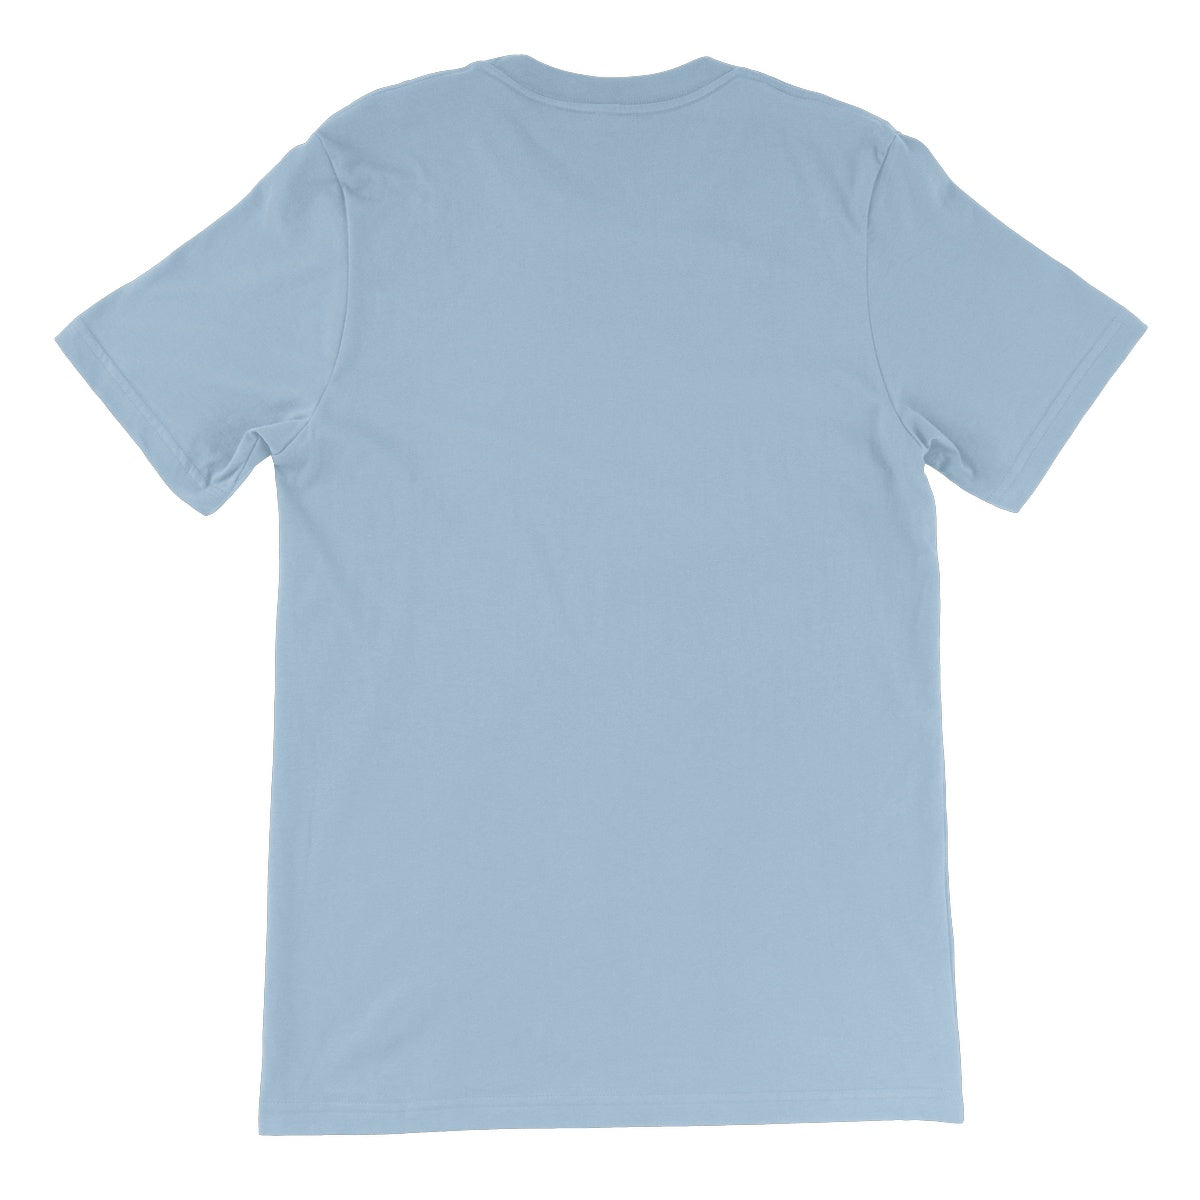 Dipole, Aurora Globe  Unisex Short Sleeve T-Shirt